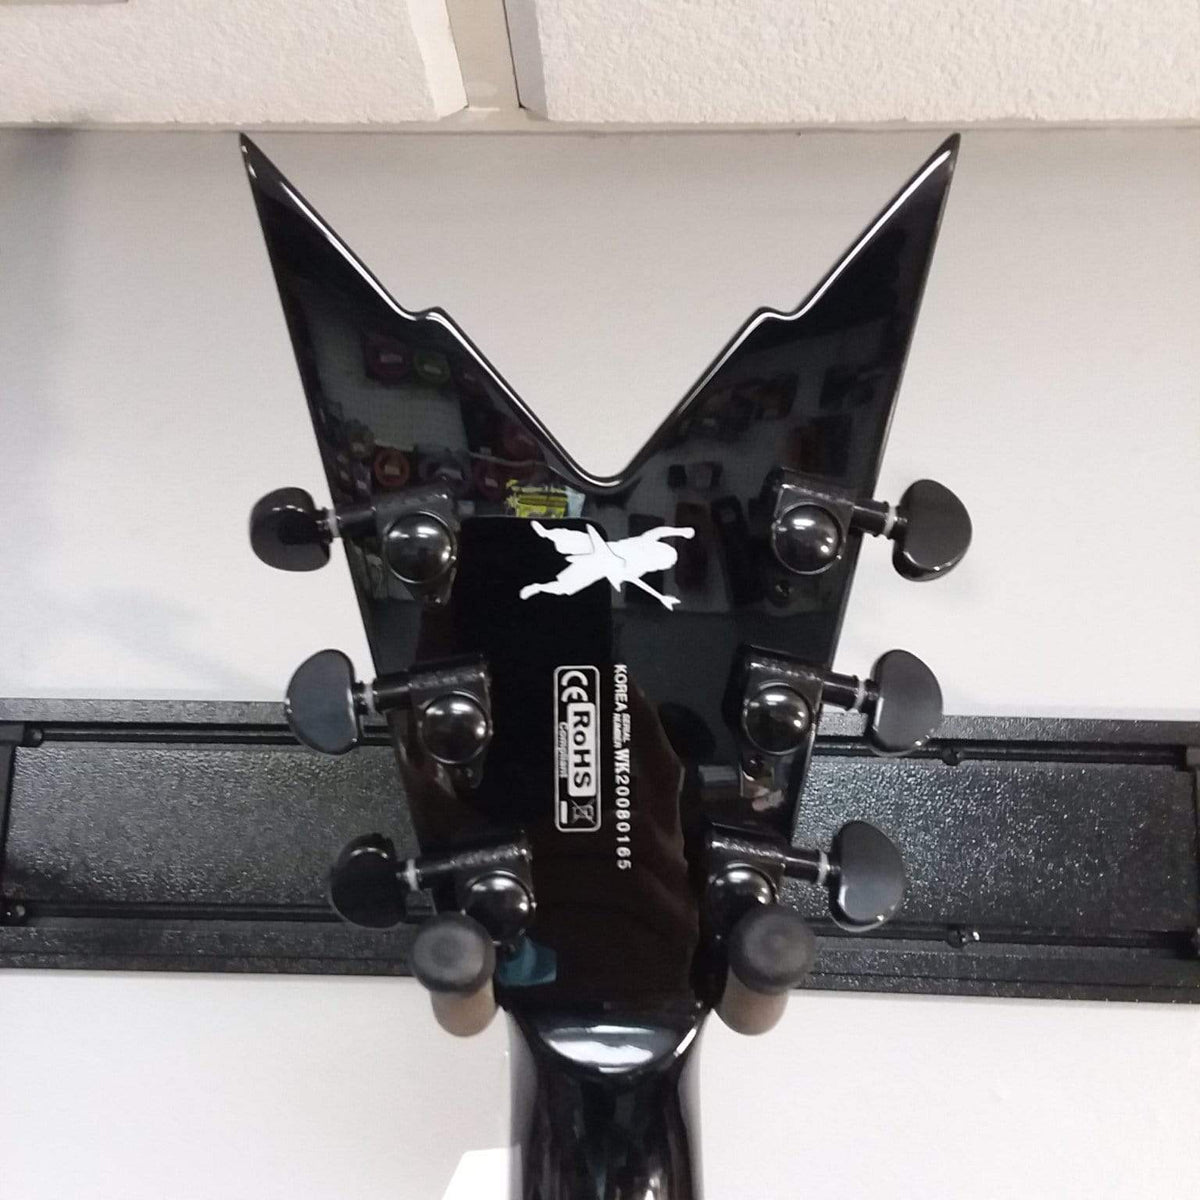 Dean Razorback Lightning B Stock Guitars on Main